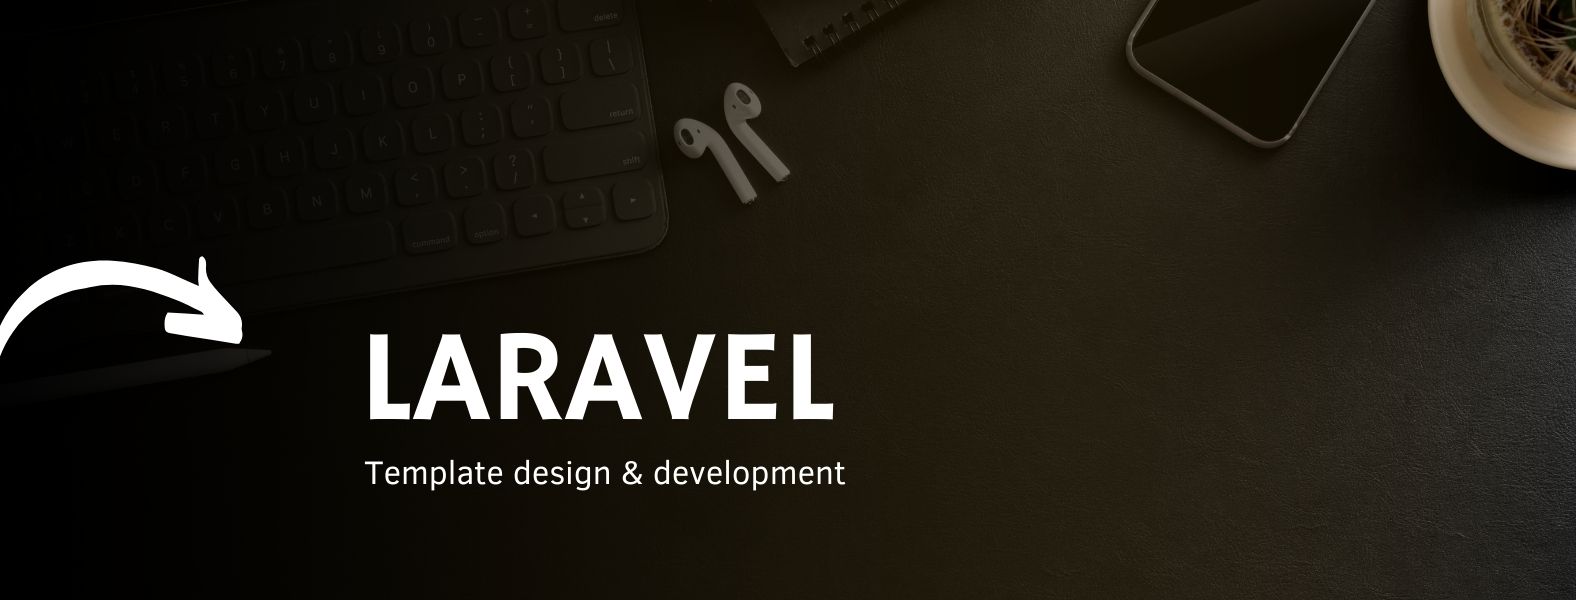 A Glance of Laravel Template Design and Development